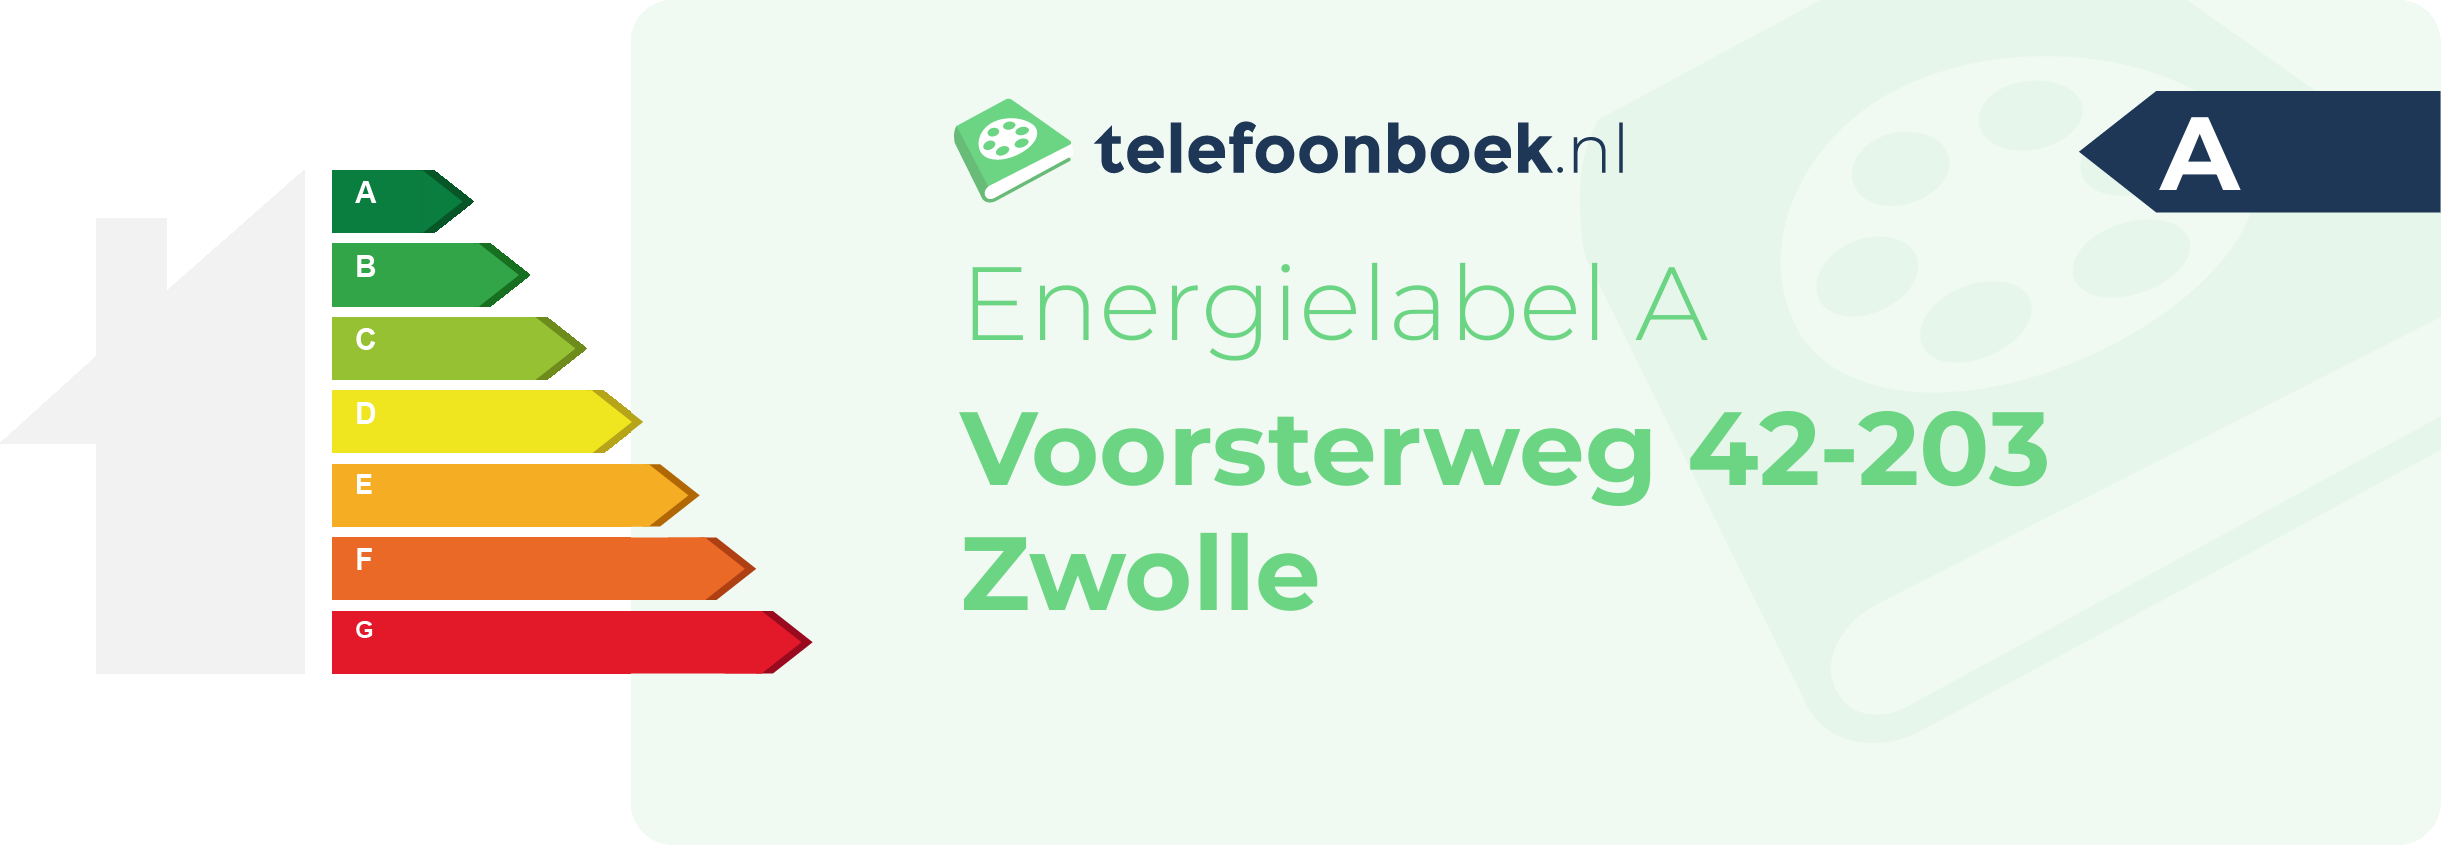 Energielabel Voorsterweg 42-203 Zwolle